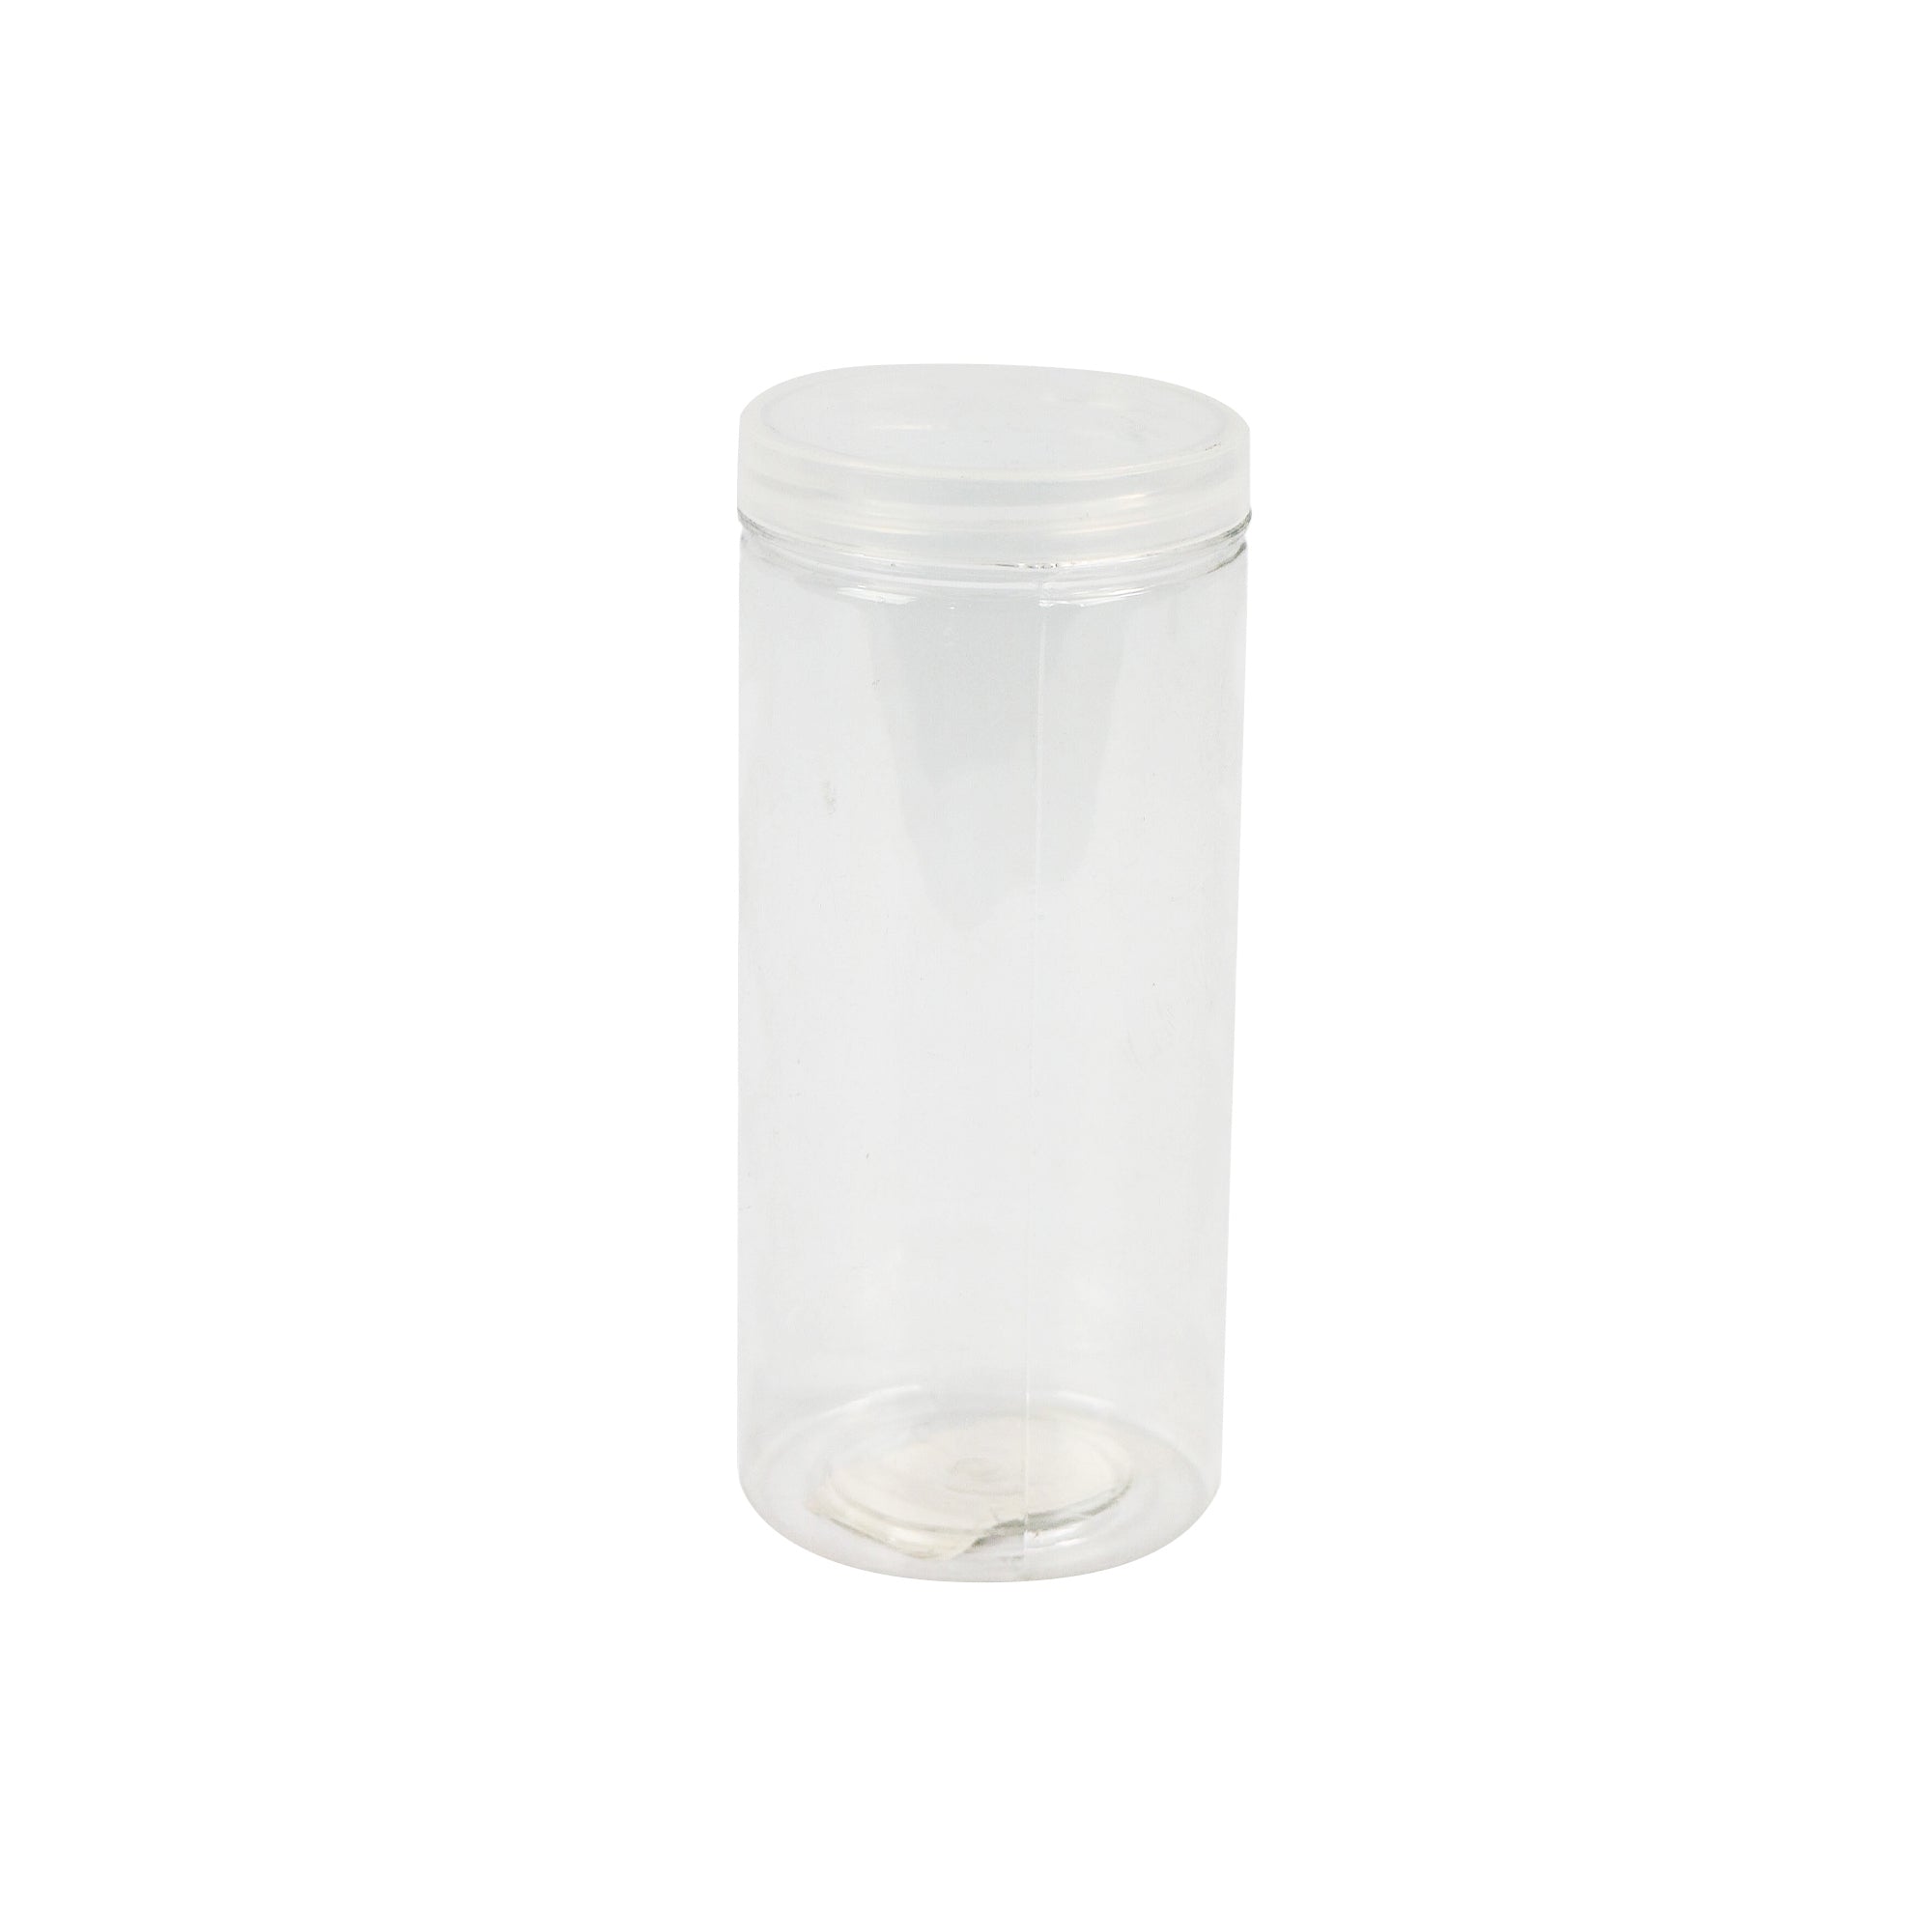 440ml Plastic Jar Bottle with Lid